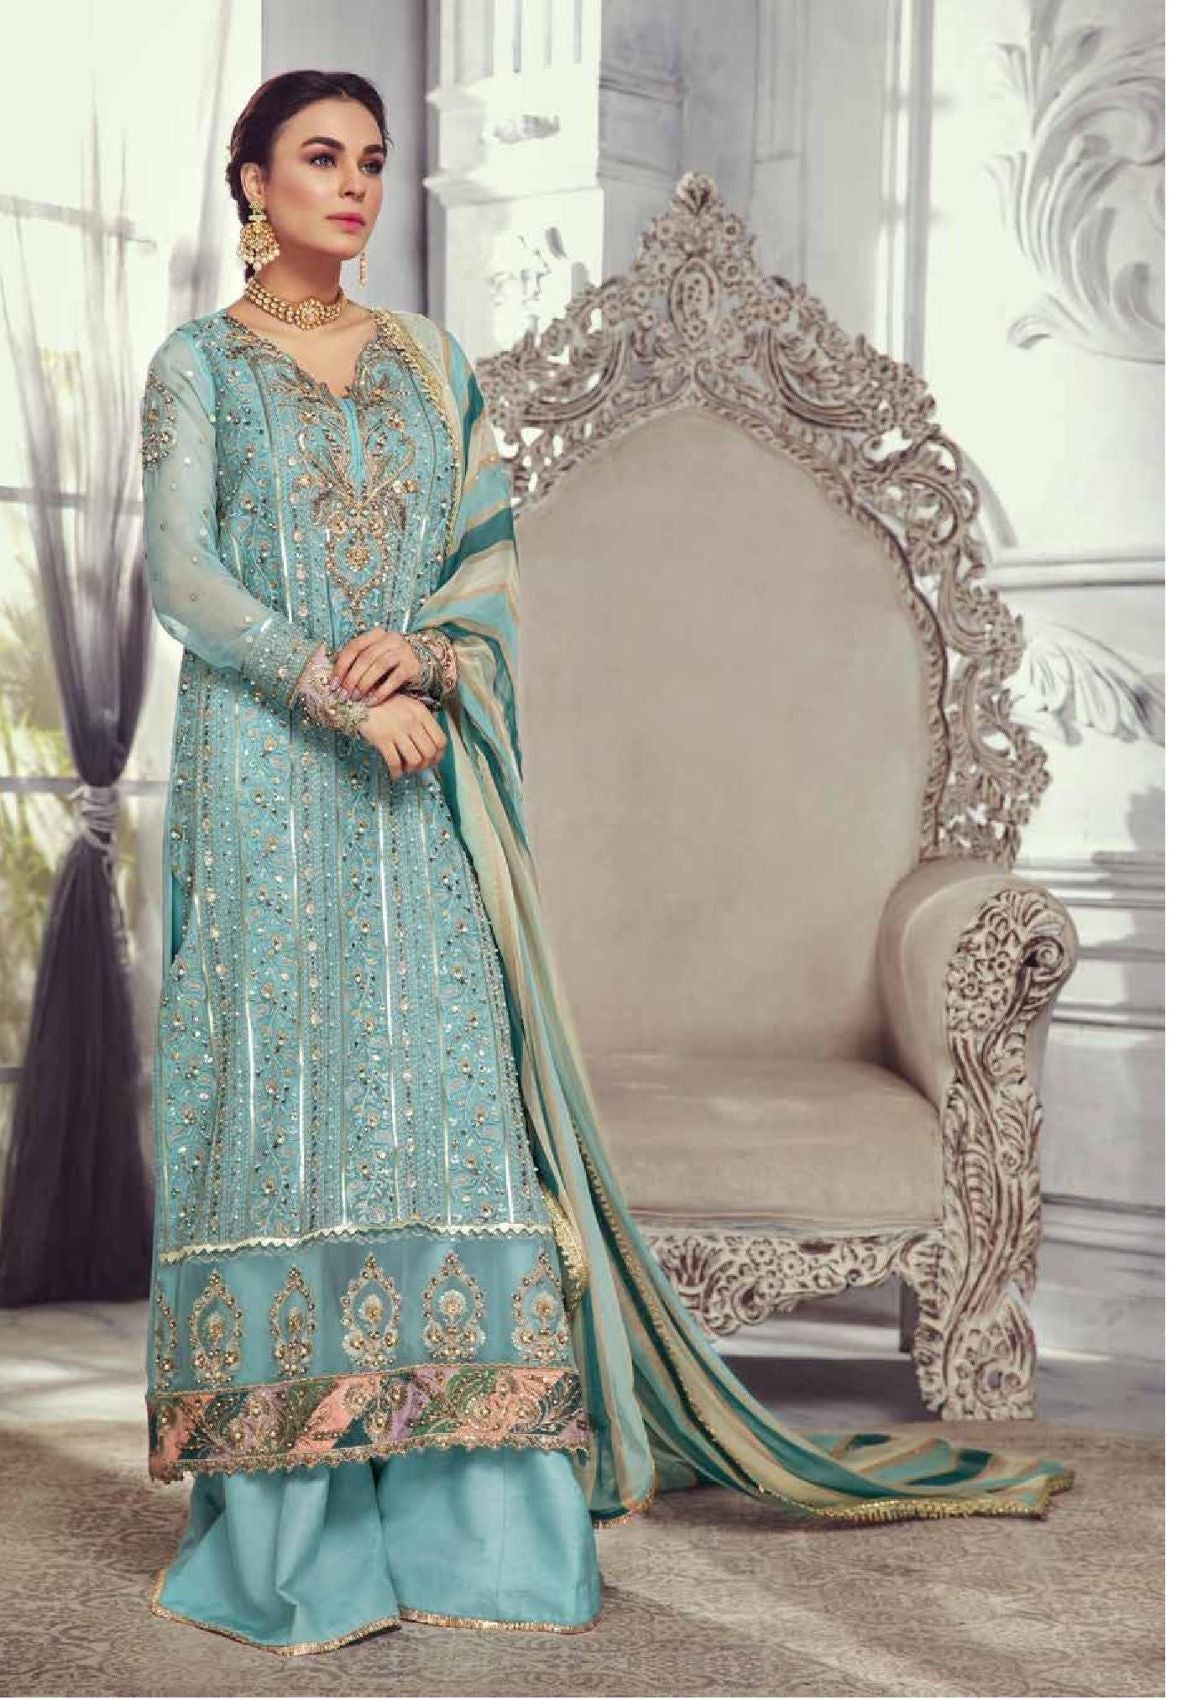 Formal dress - Charizma - Dastan-e-Jashan - DJW#09 available at Saleem Fabrics Traditions